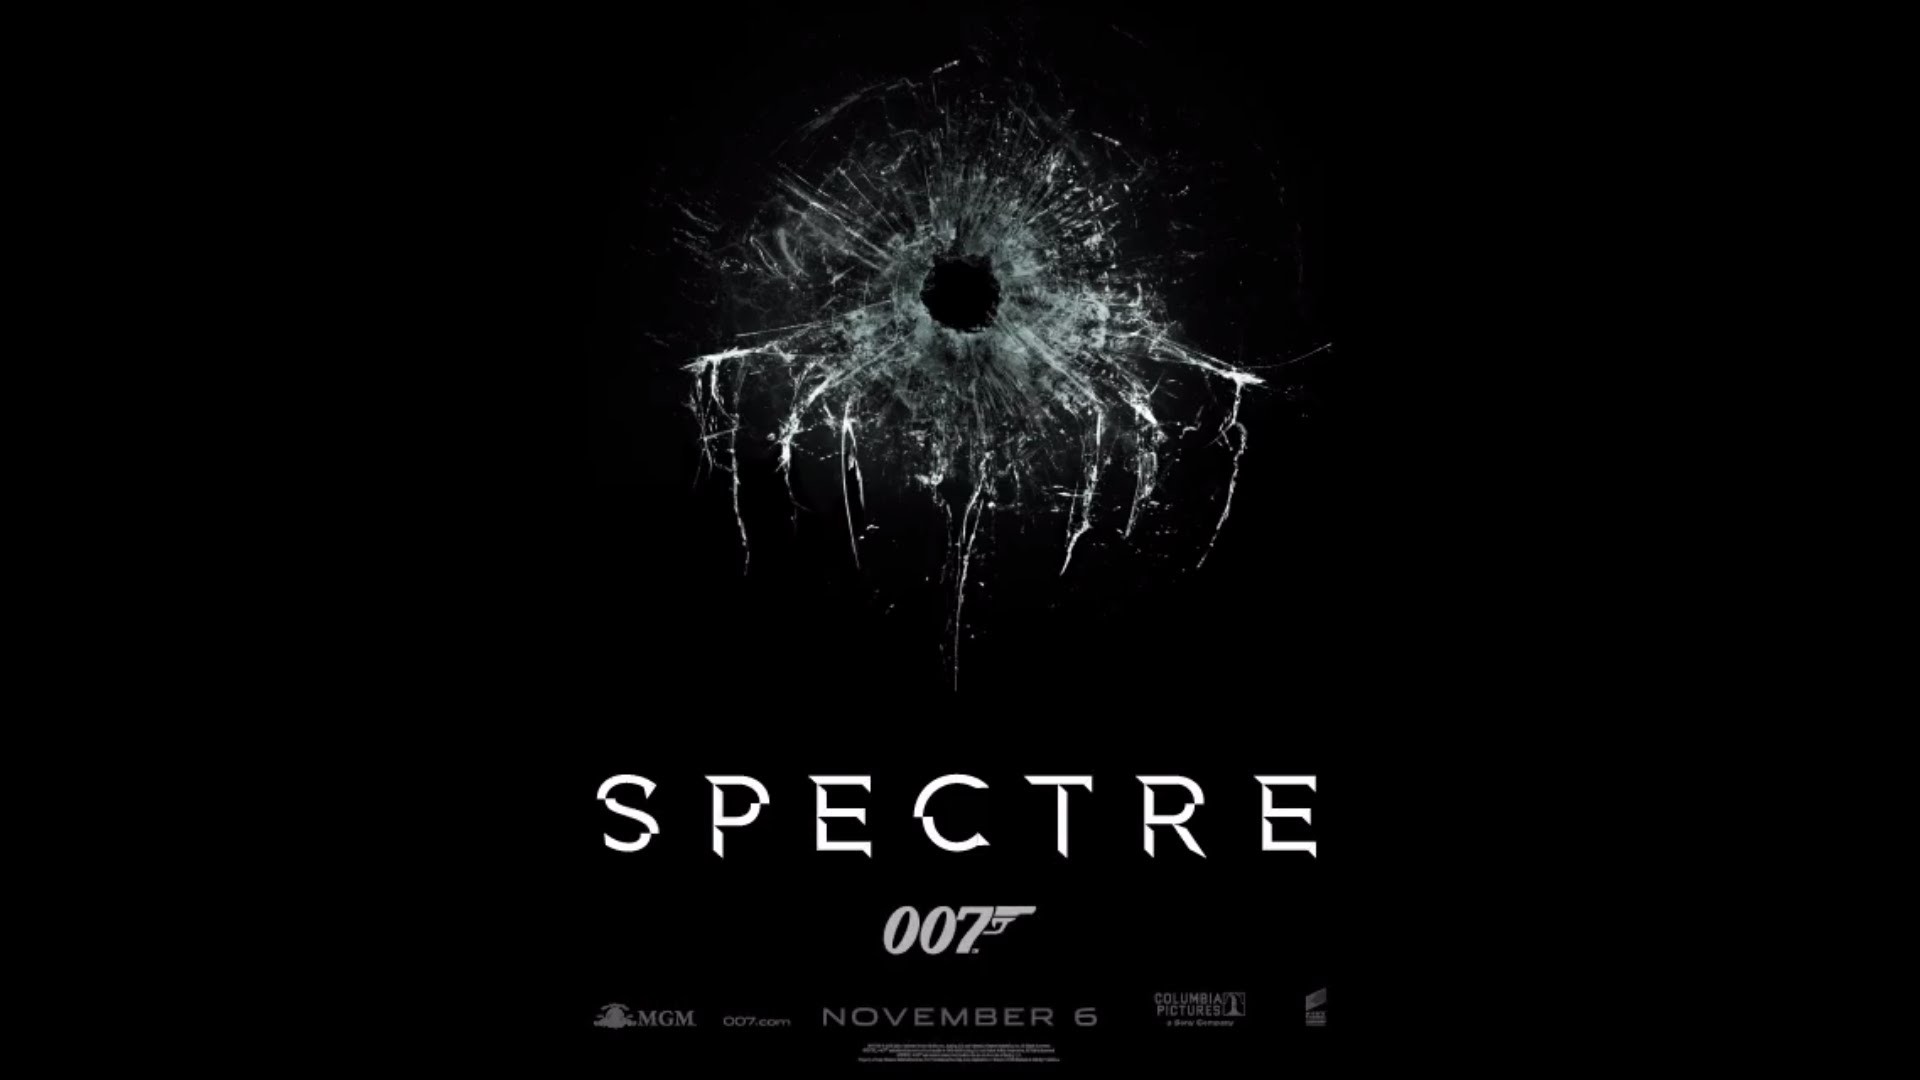 1920x1080 Craig As James Bond In 2015 Spectre 007 Movie Poster Wallpaper .